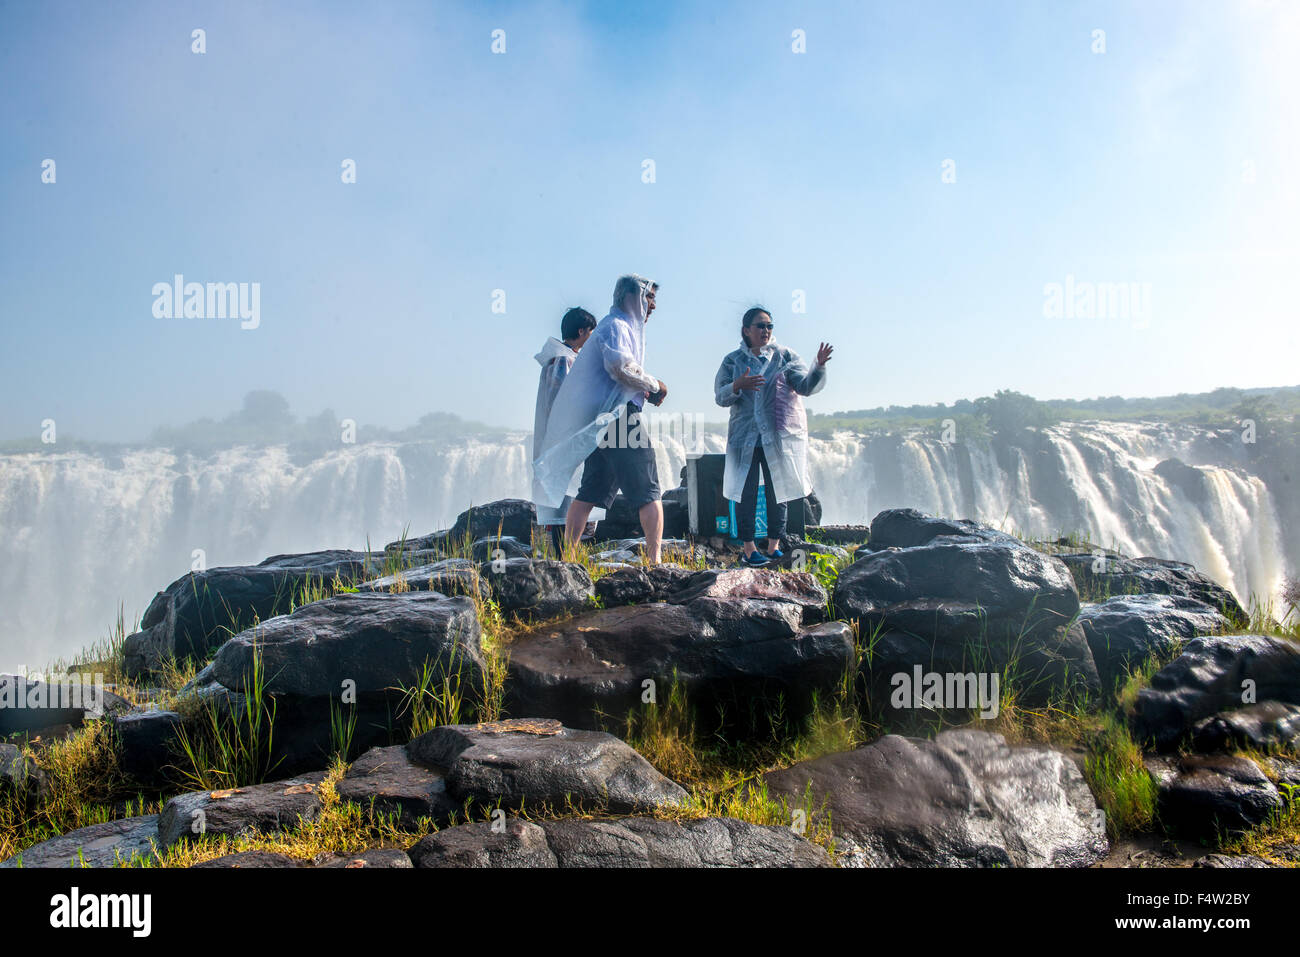 Victoria Falls, Zimbabwe - Turistas con ponchos de lluvia junto a la cascada de Victoria Falls. Foto de stock